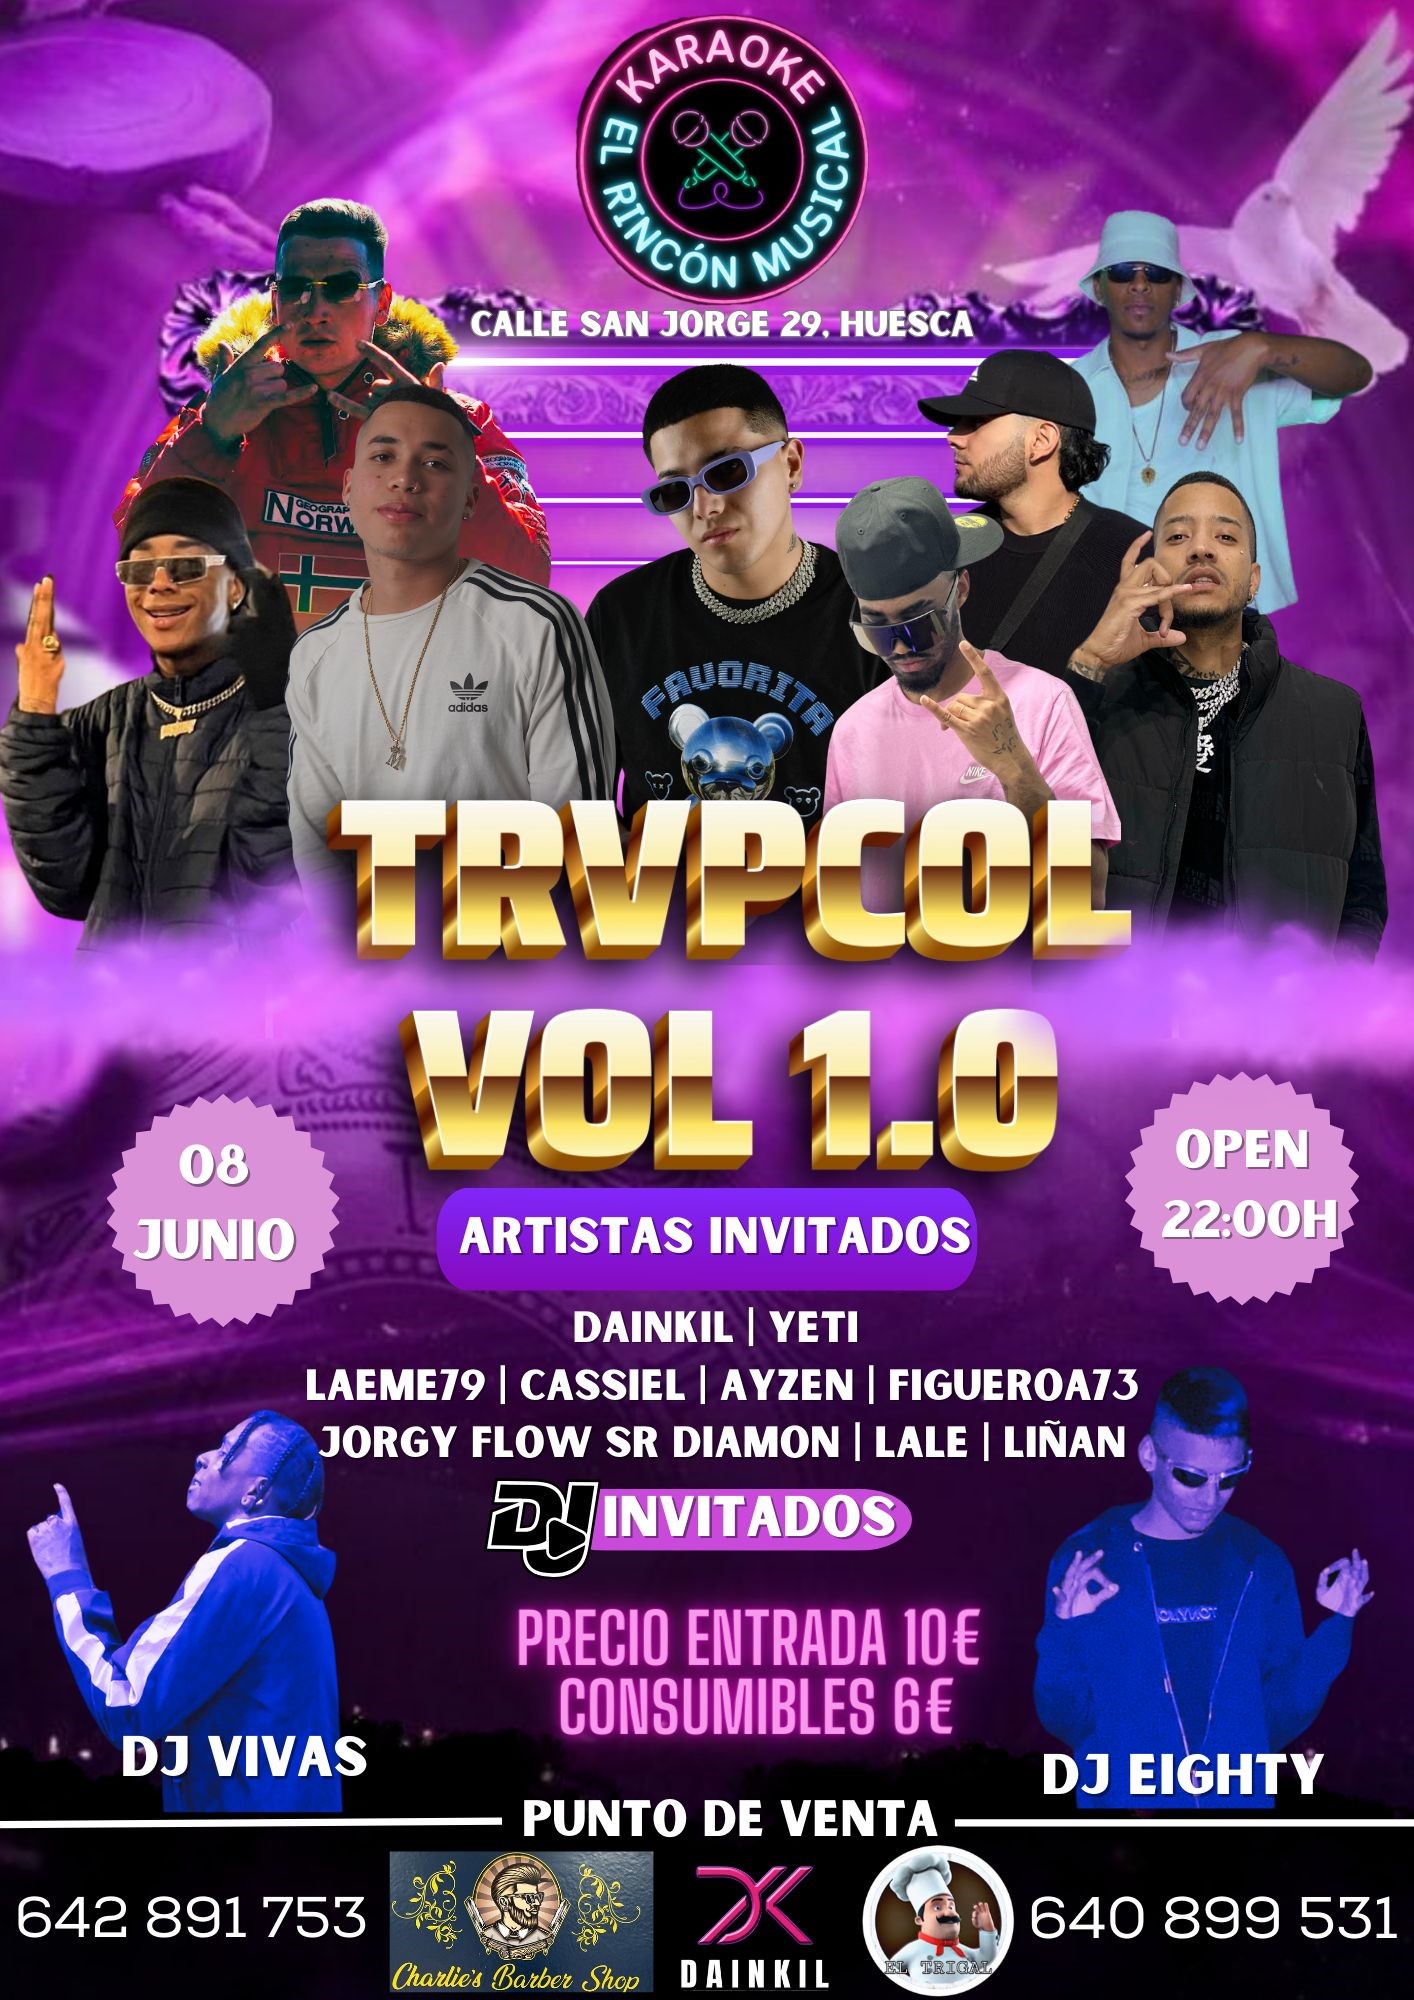 TRVPCOL VOL 1.0  on Jun 08, 00:00@Karaoke el Rincón Musical - Buy tickets and Get information on karaoke_elrinconmusical 